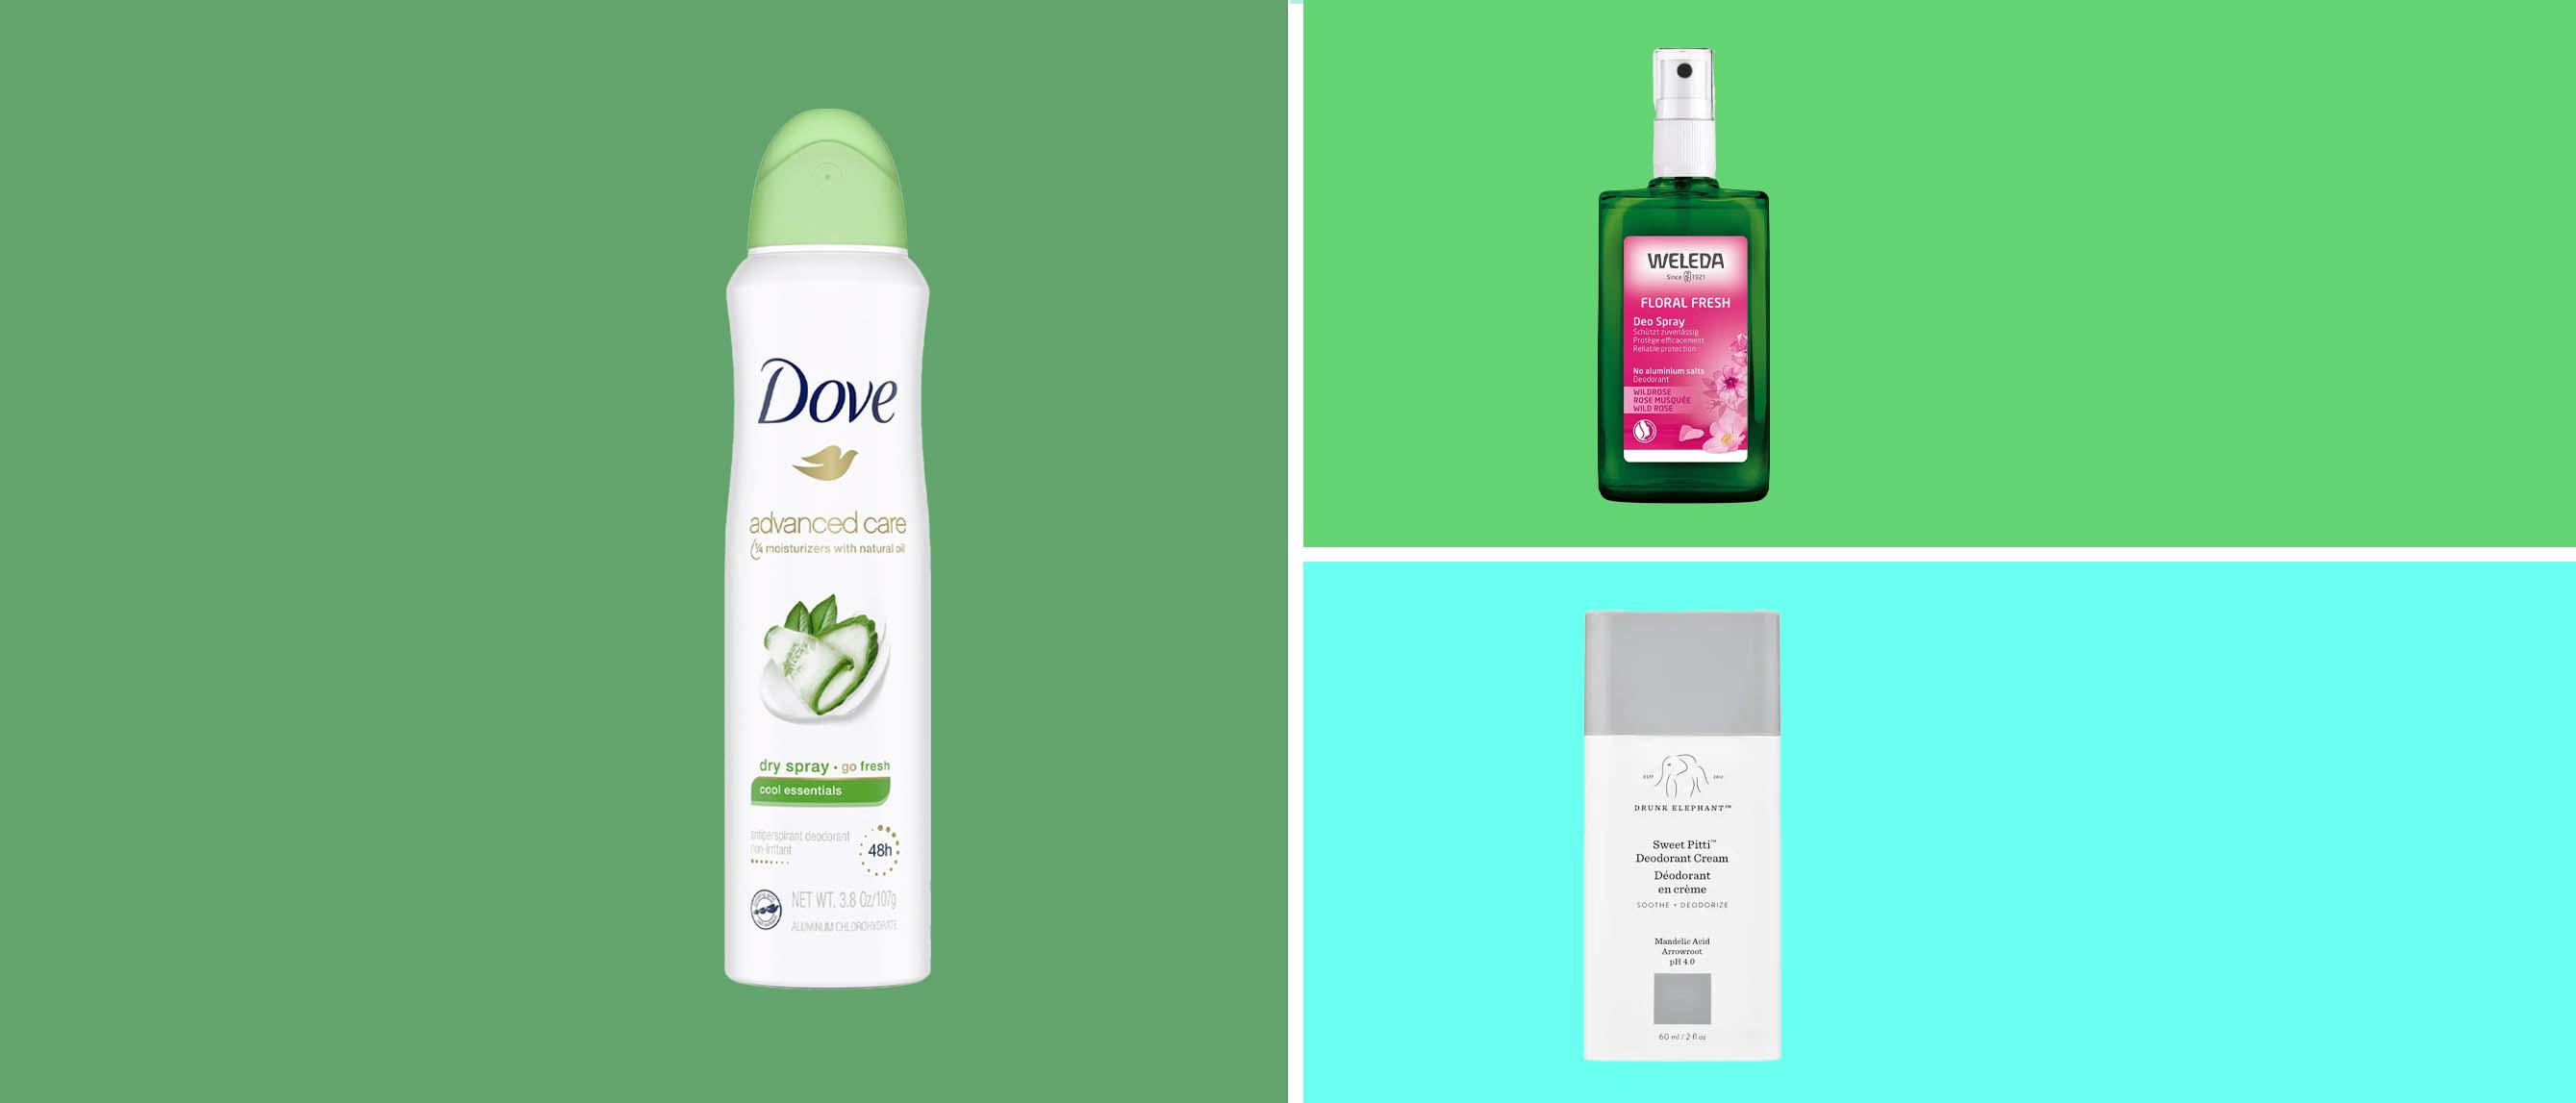 deodorants from dove, weleda and drunk elephant